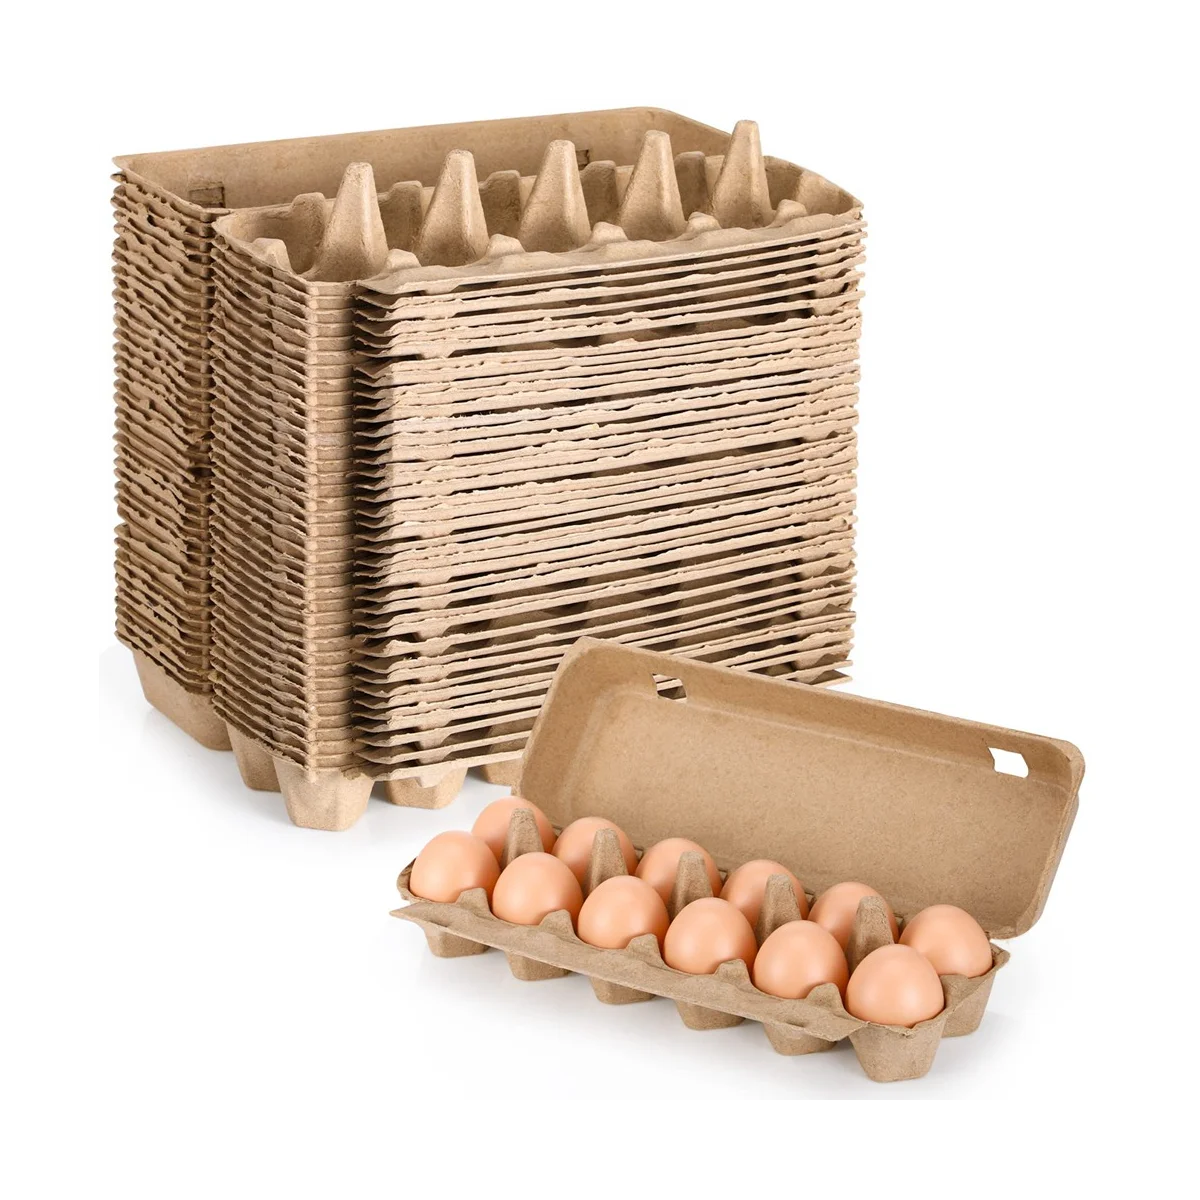 

20 шт. картонные коробки для яиц, Пустые Картонные Коробки для целлюлозы, один дюжина картонных коробок для яиц, пустой лоток для яиц, держатель для яиц